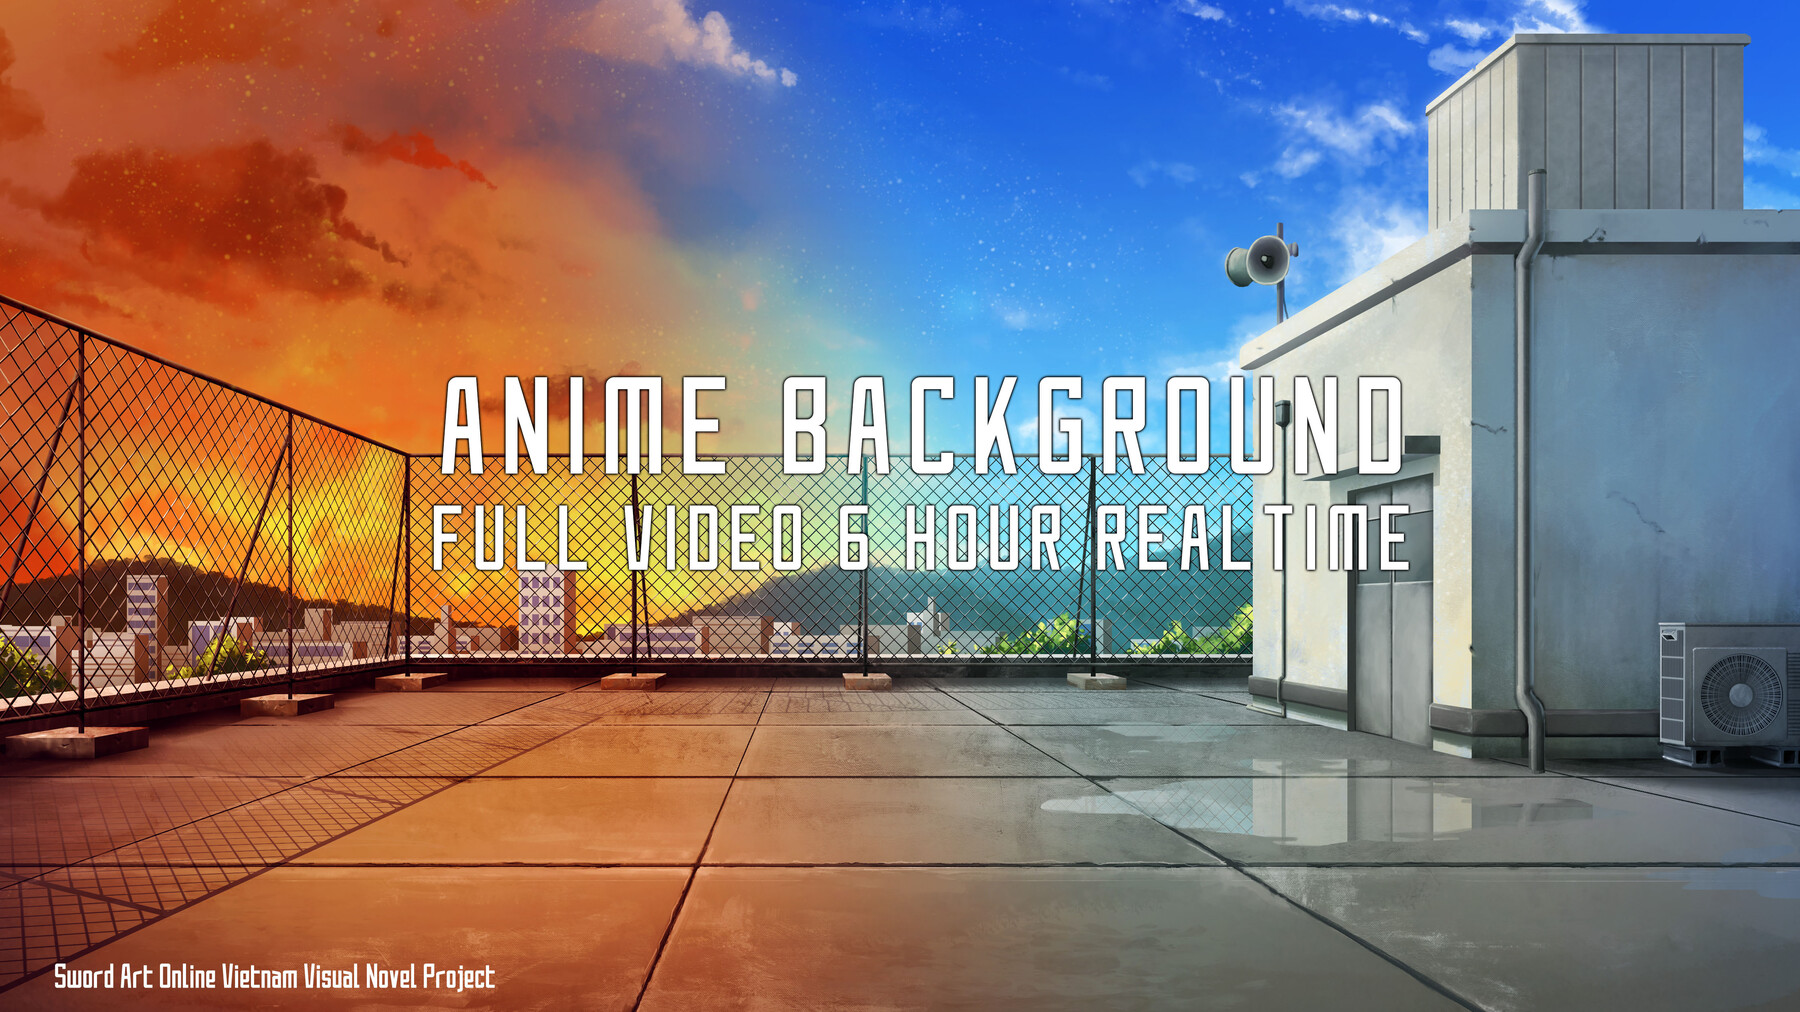 ArtStation - Anime Backrgound Rooftop - Full Video process 6 hour |  Tutorials